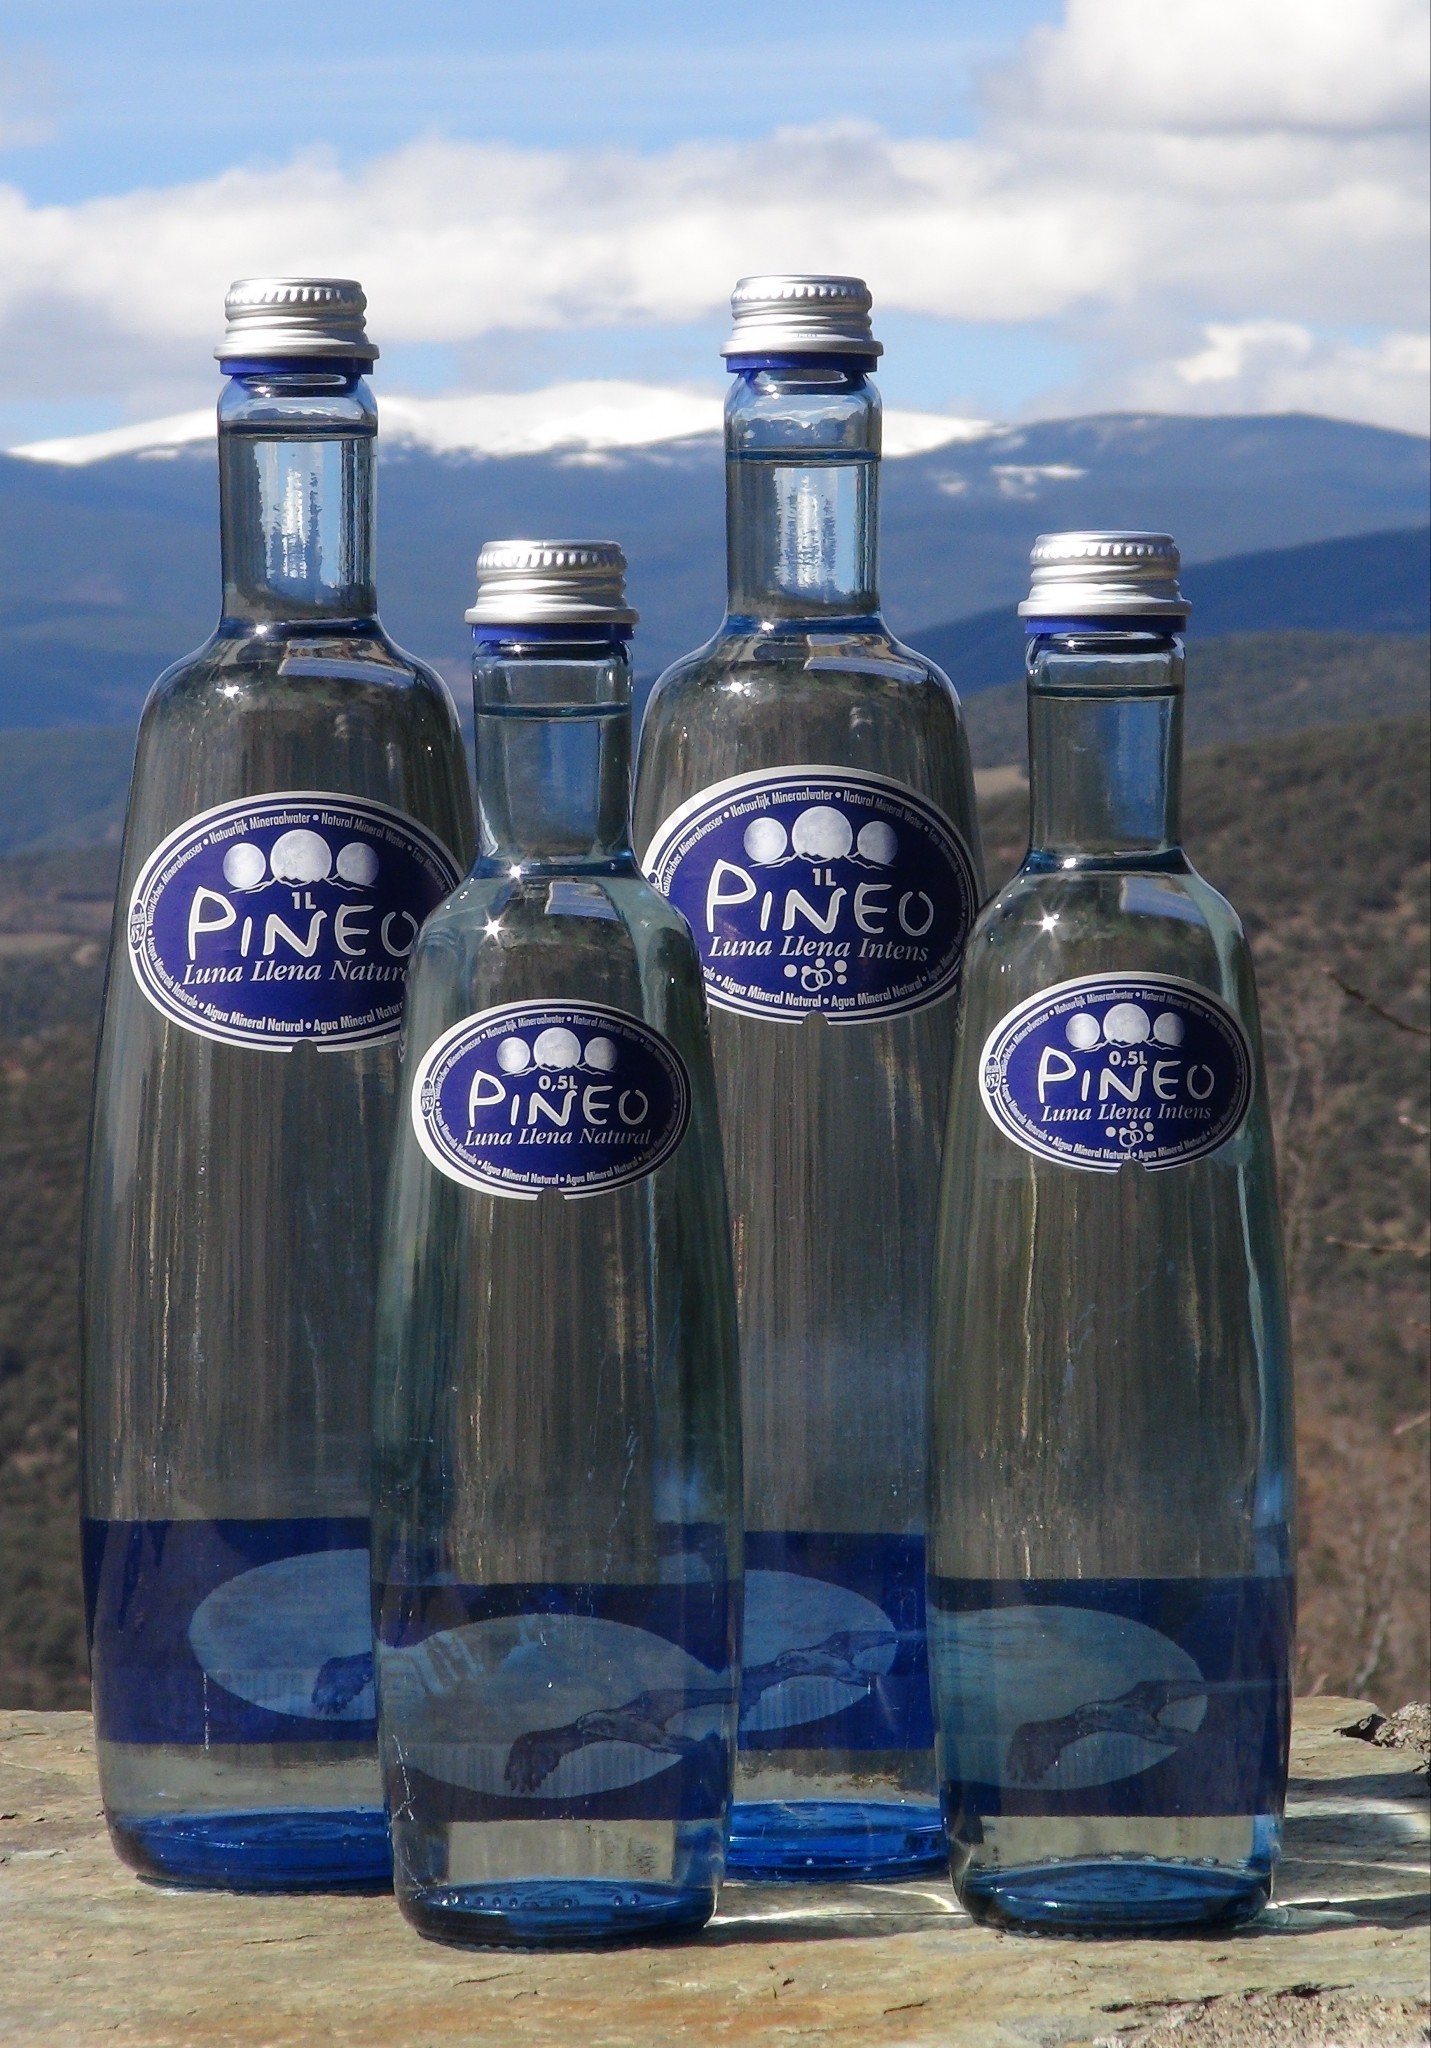 Pineo water range in 1 l glass bottles